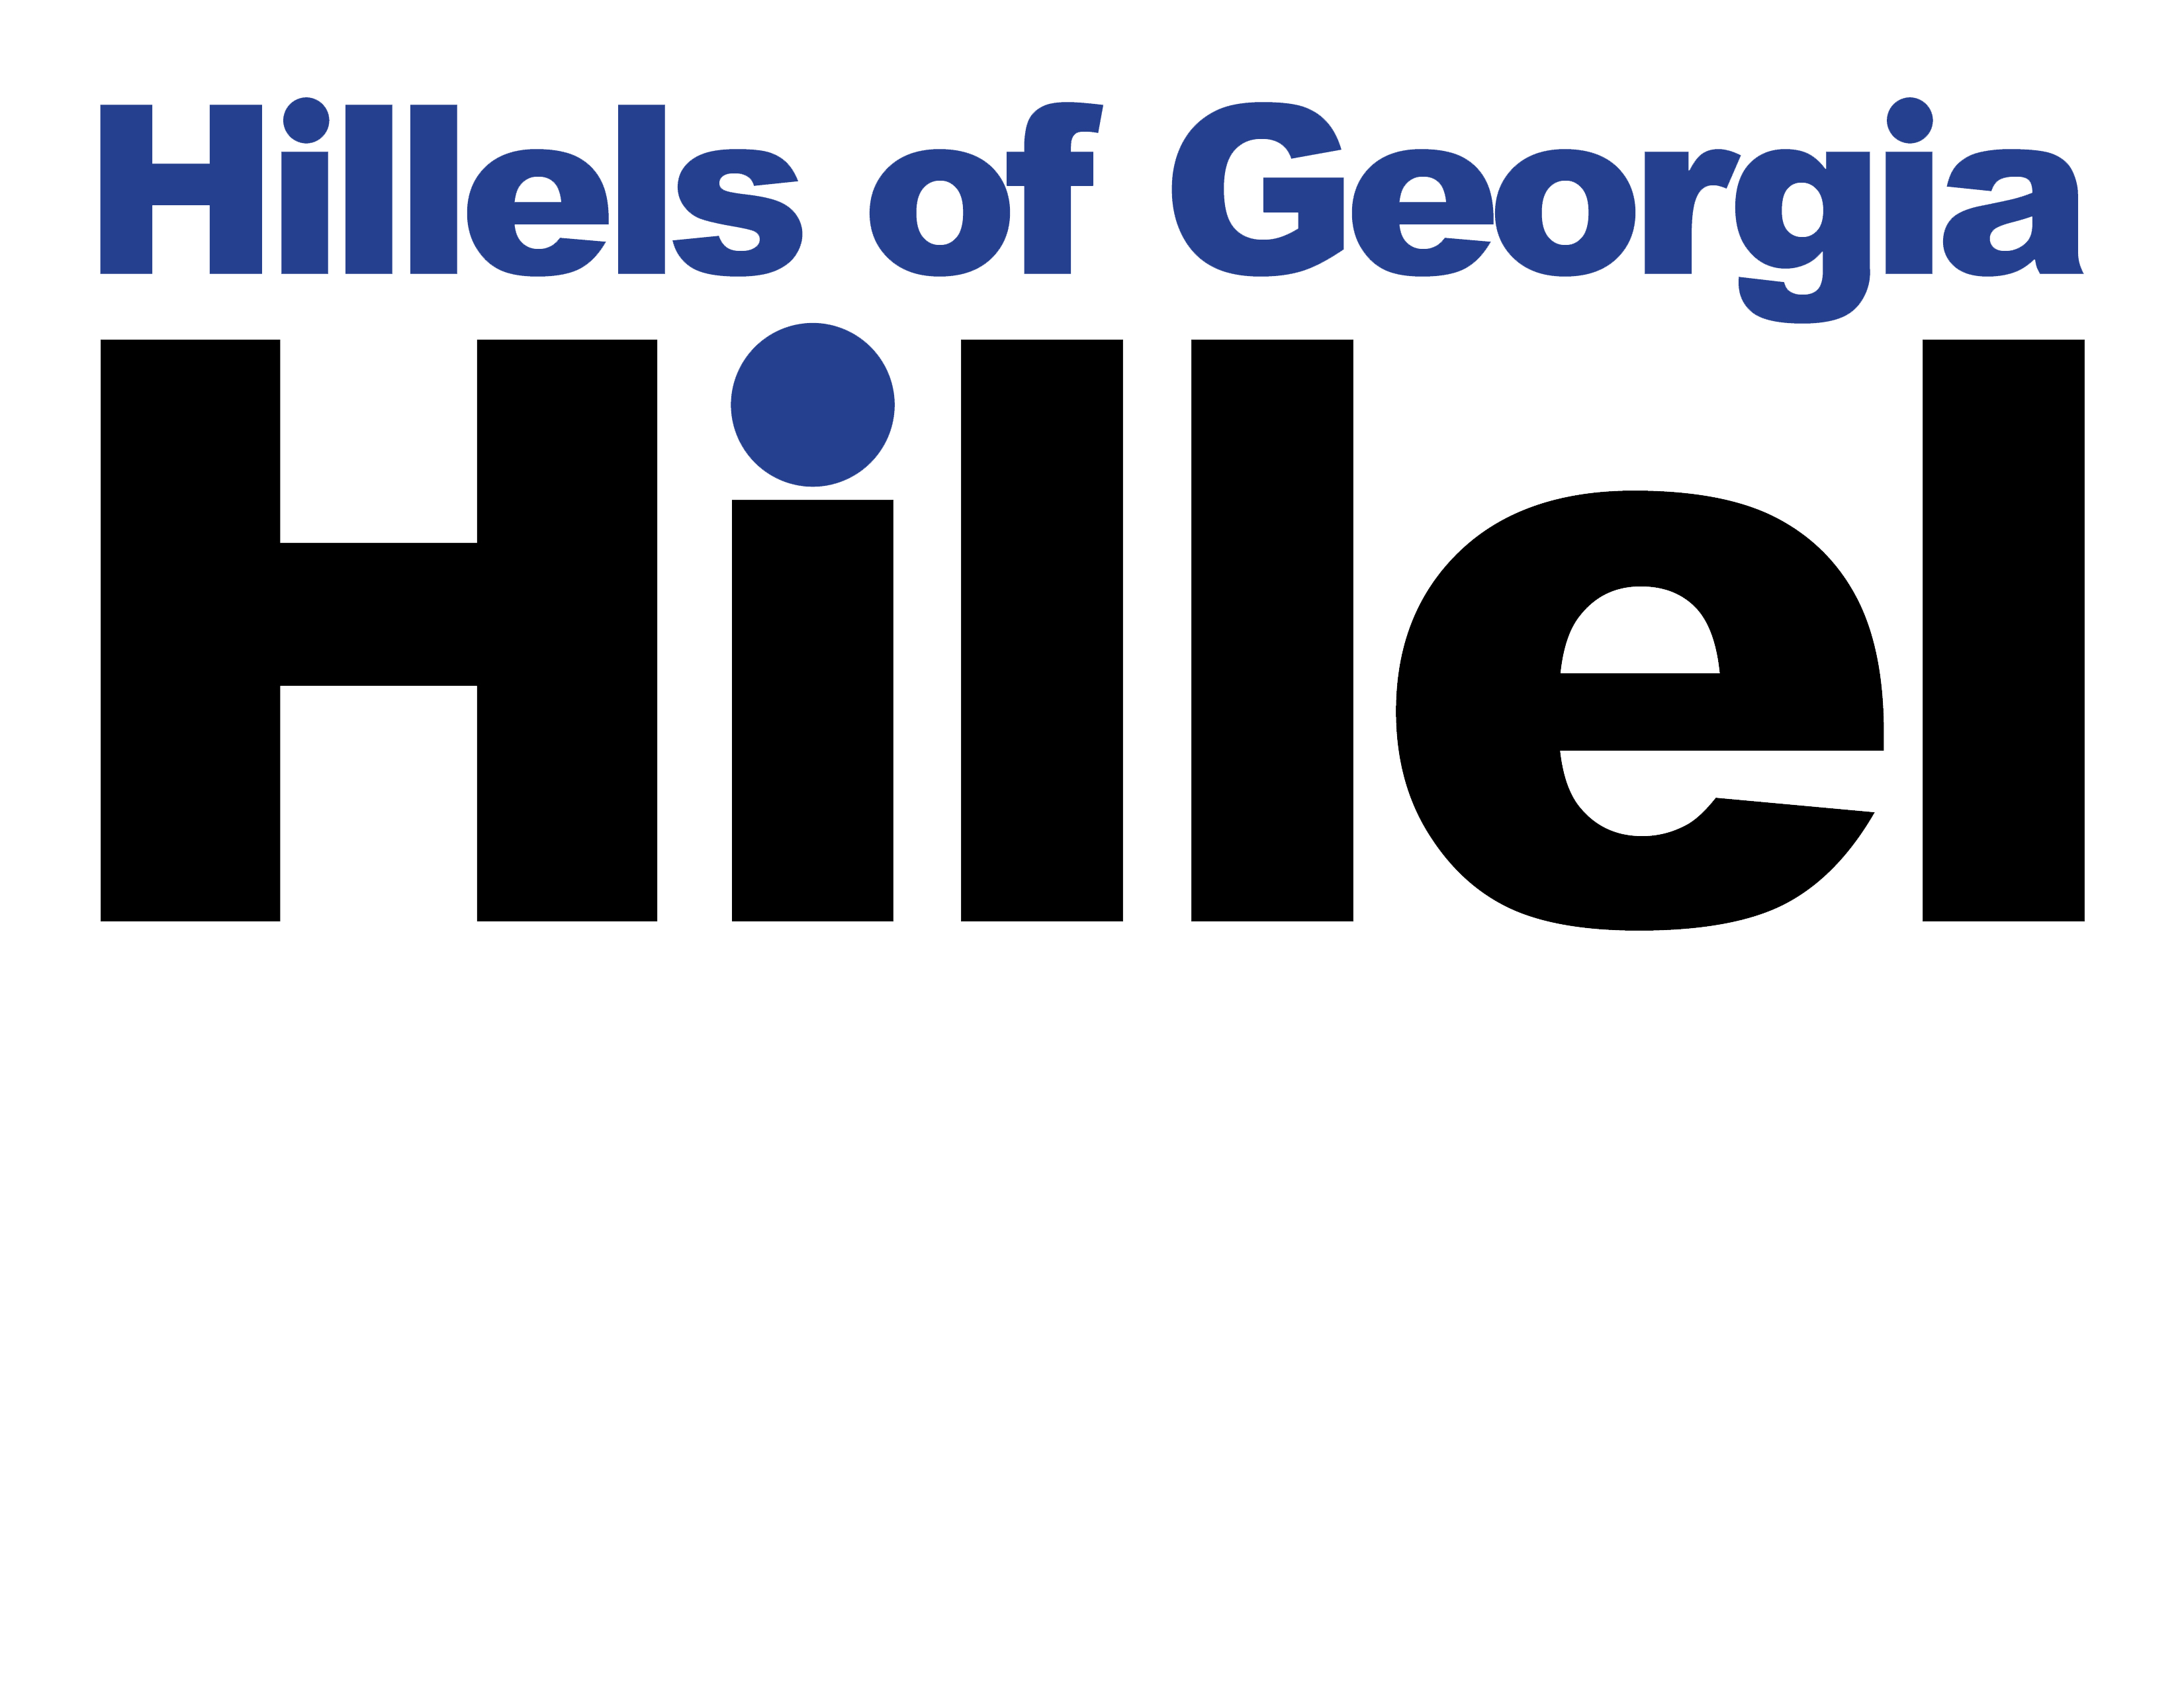 Hillels of Georgia